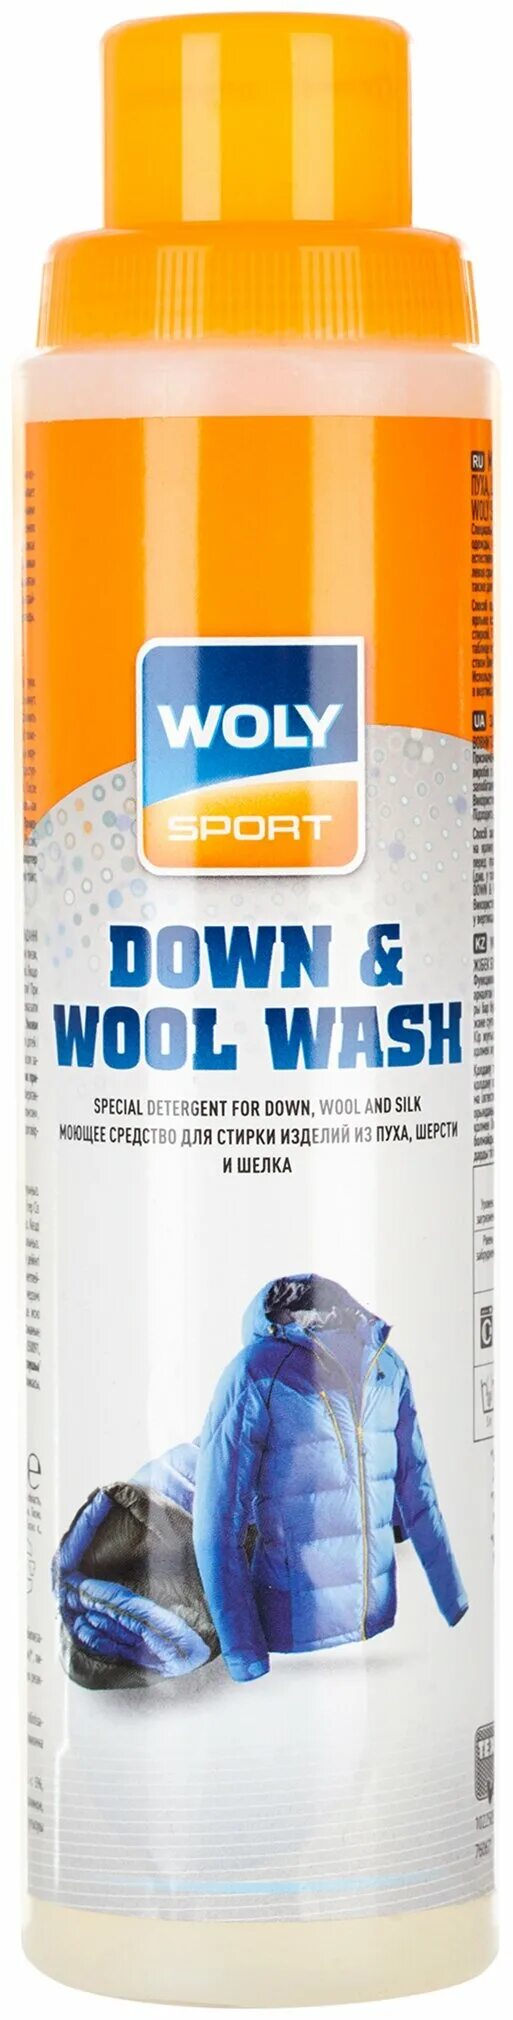 Средство для стирки Woly Sport. Woly Sport down Wool Wash. Средство для стирки пуховиков. Моющее средство для стирки пуховиков Woly.